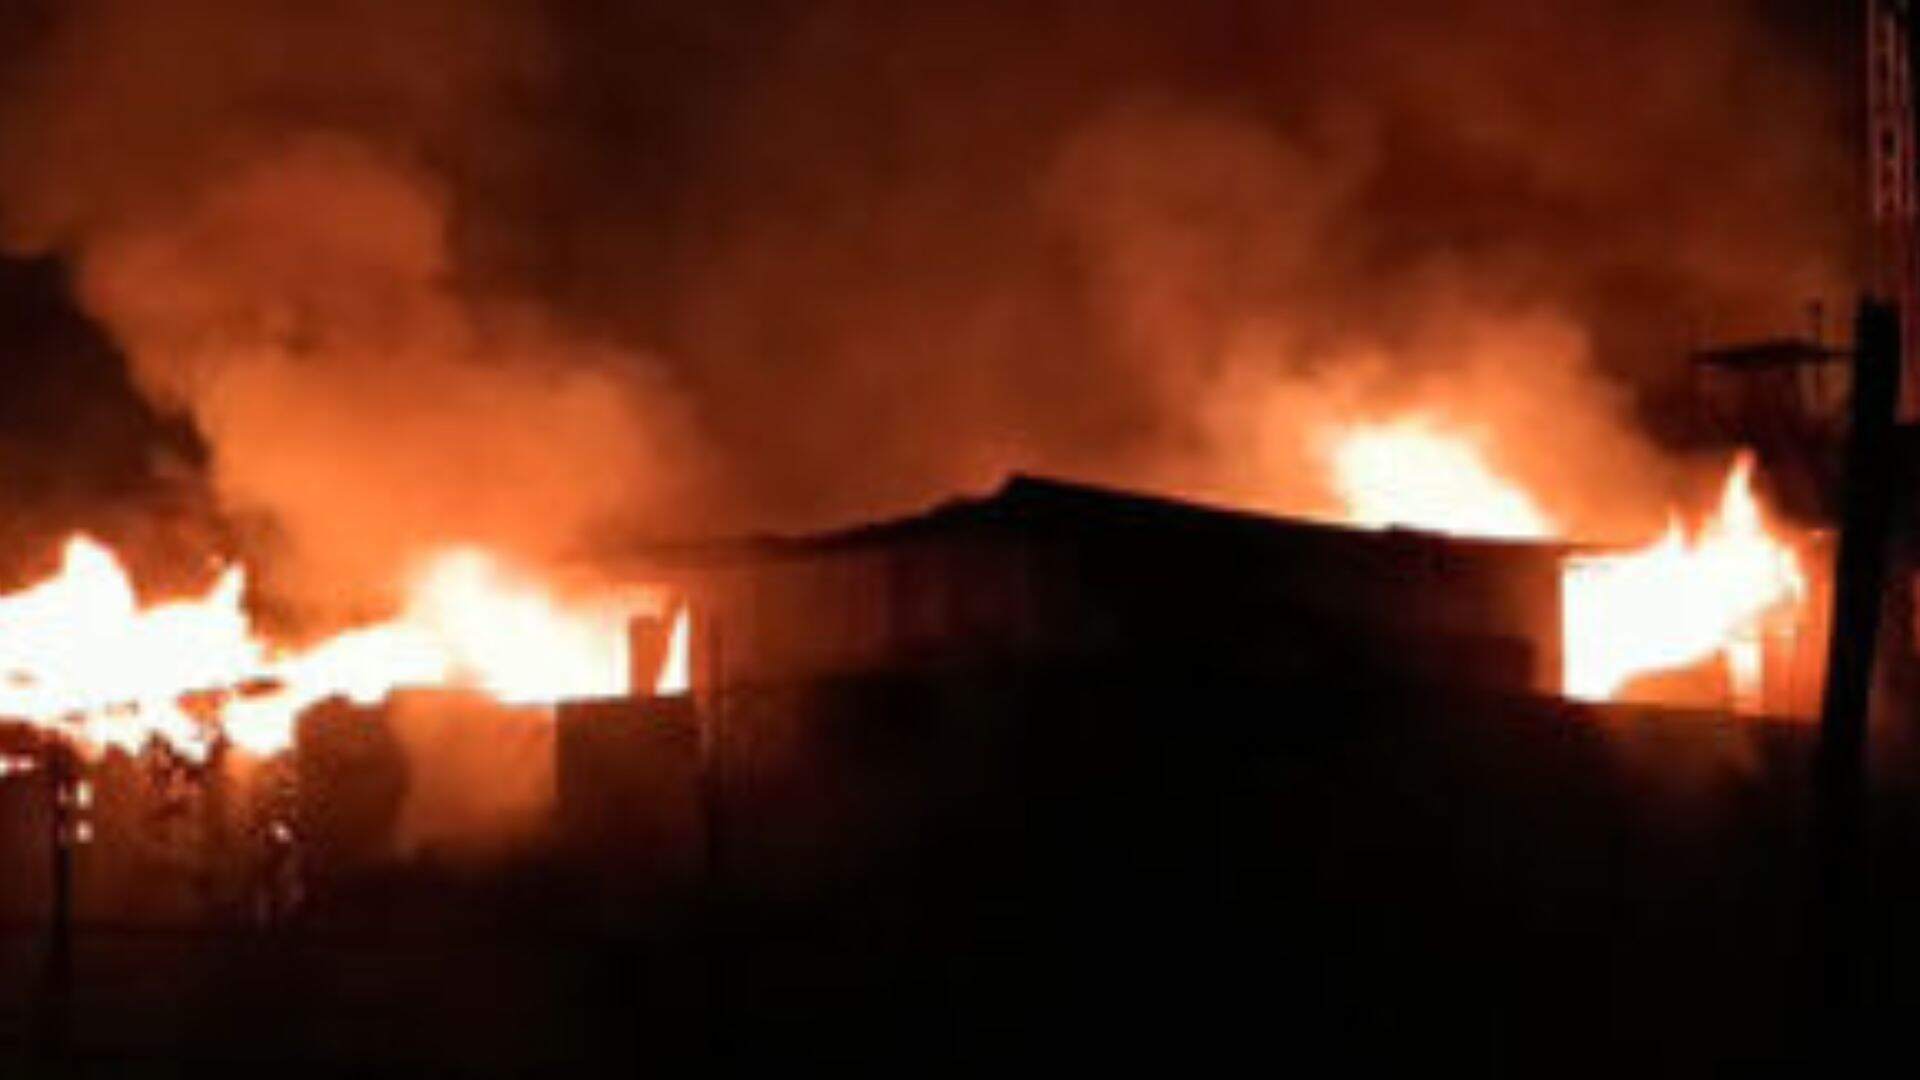 Delhi: Fire Erupts In A Four-Story Building In Jyoti Nagar